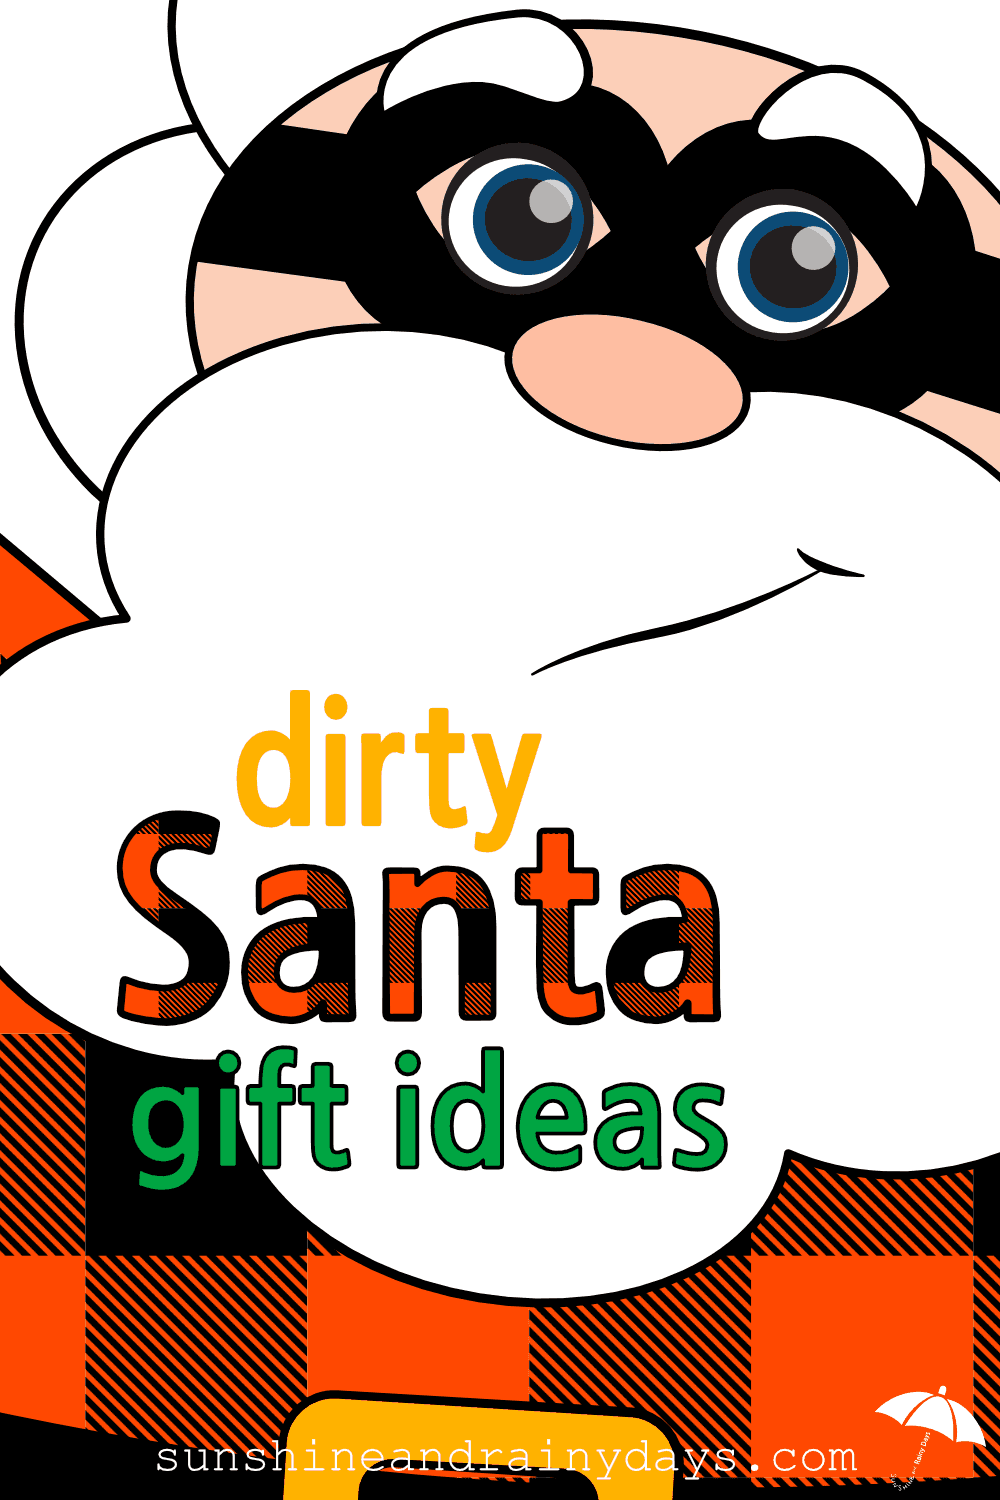 https://sunshineandrainydays.com/wp-content/uploads/2015/11/Dirty-Santa-Gift-Ideas-P2.png.webp